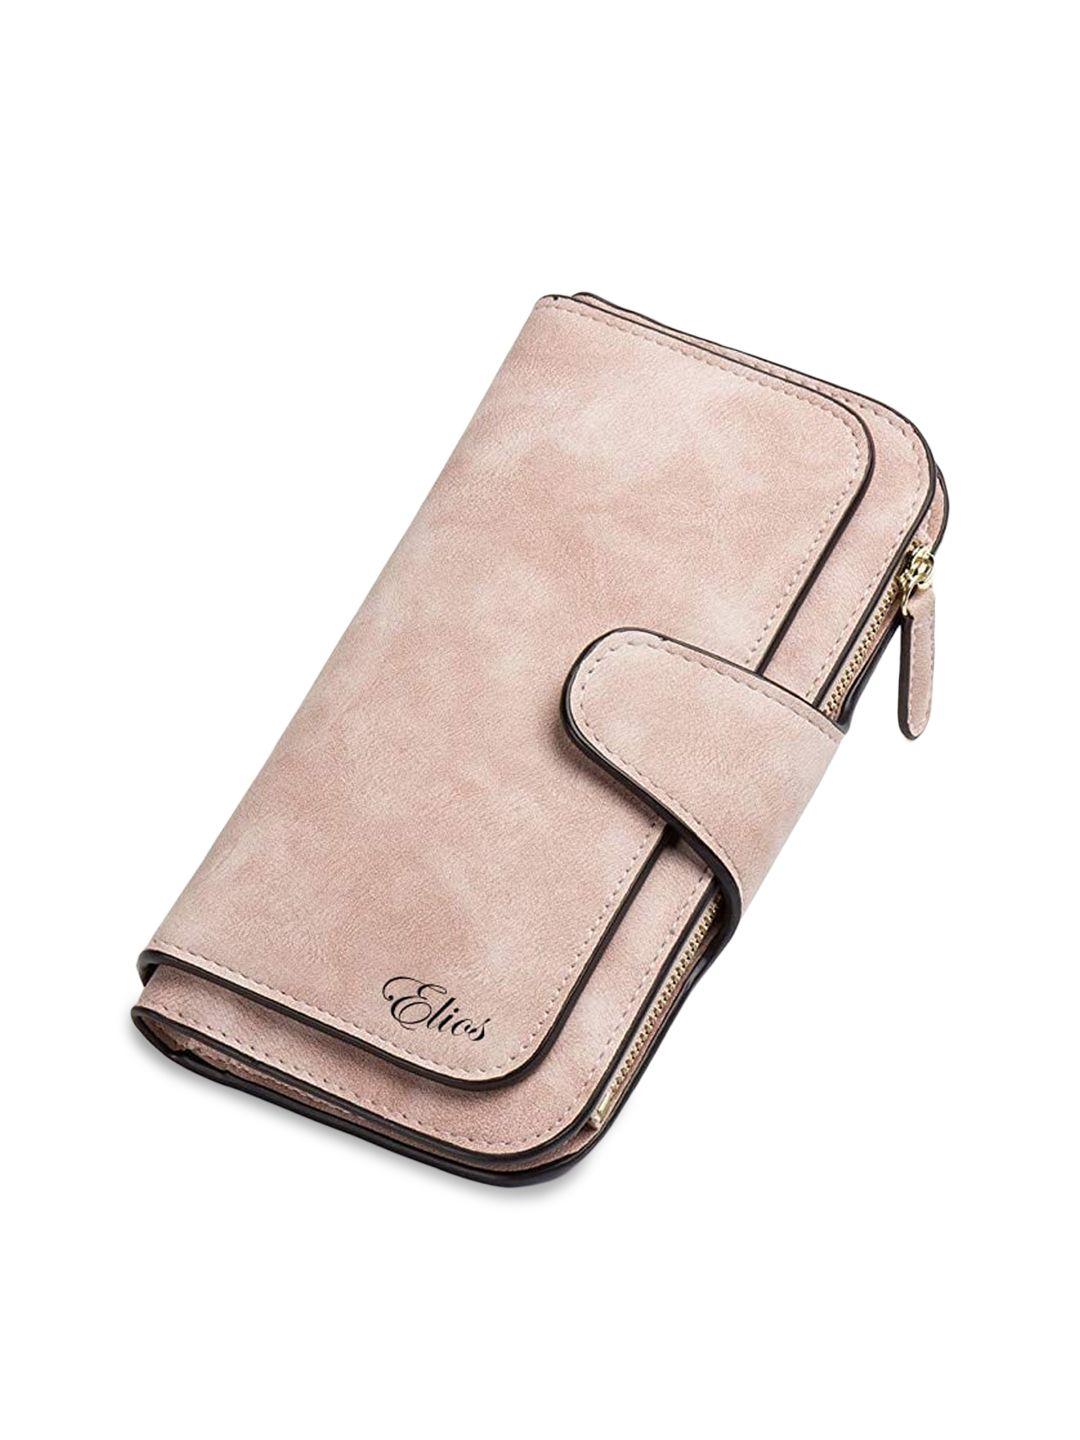 elios pink & black purse clutch